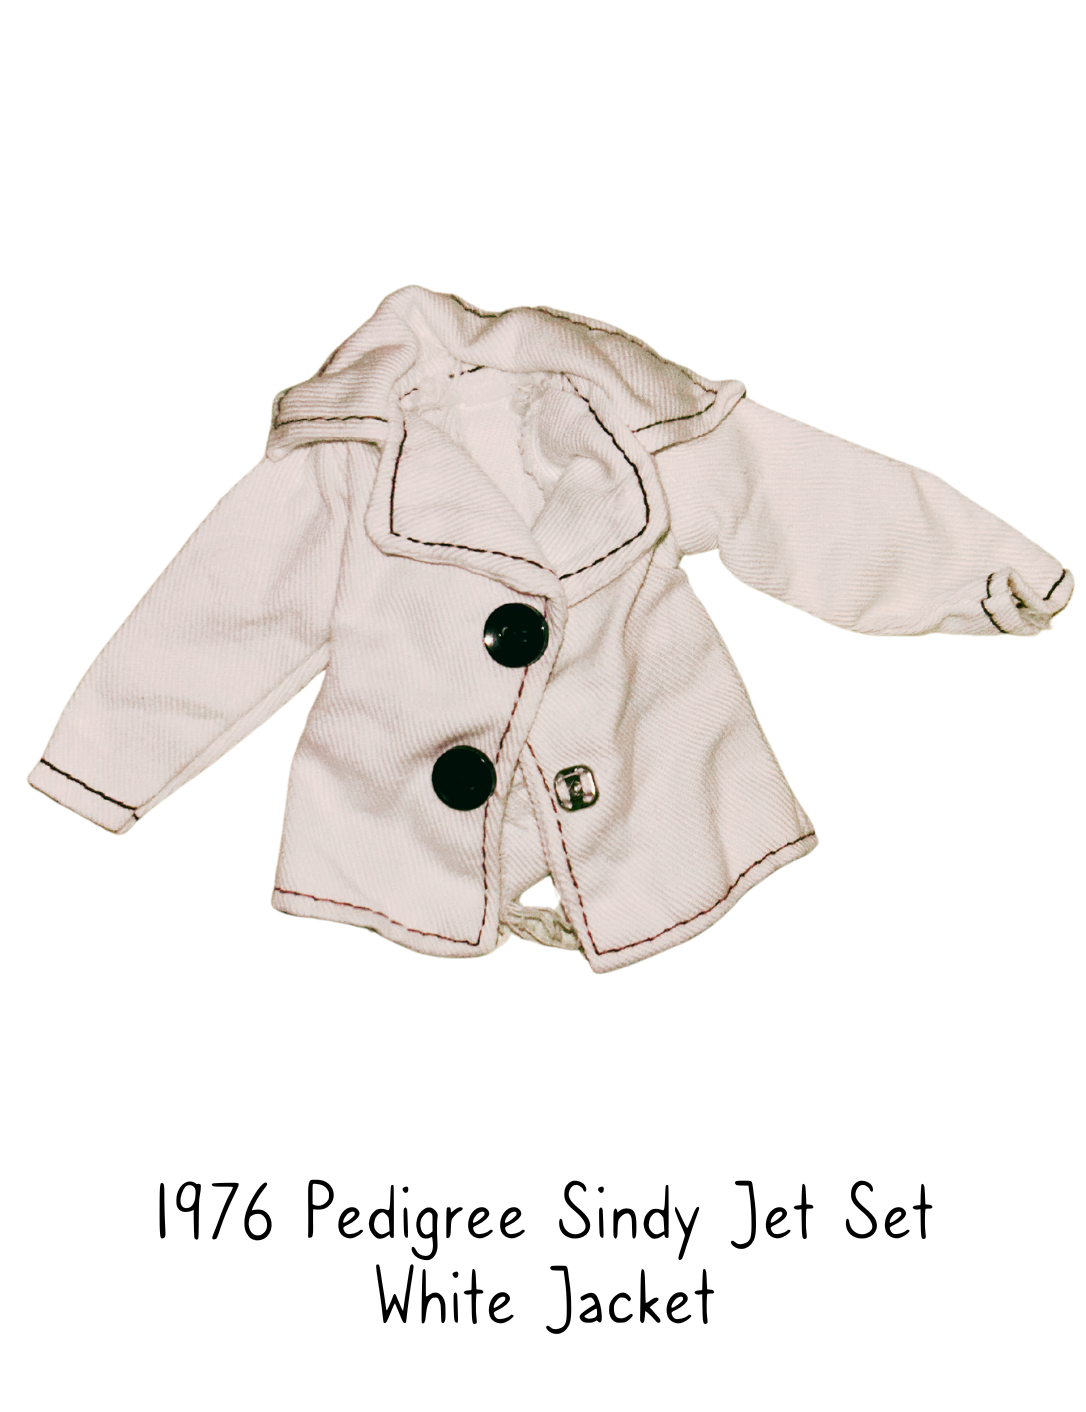 1976 Pedigree Sindy Fashion Doll Jet Set White Jacket